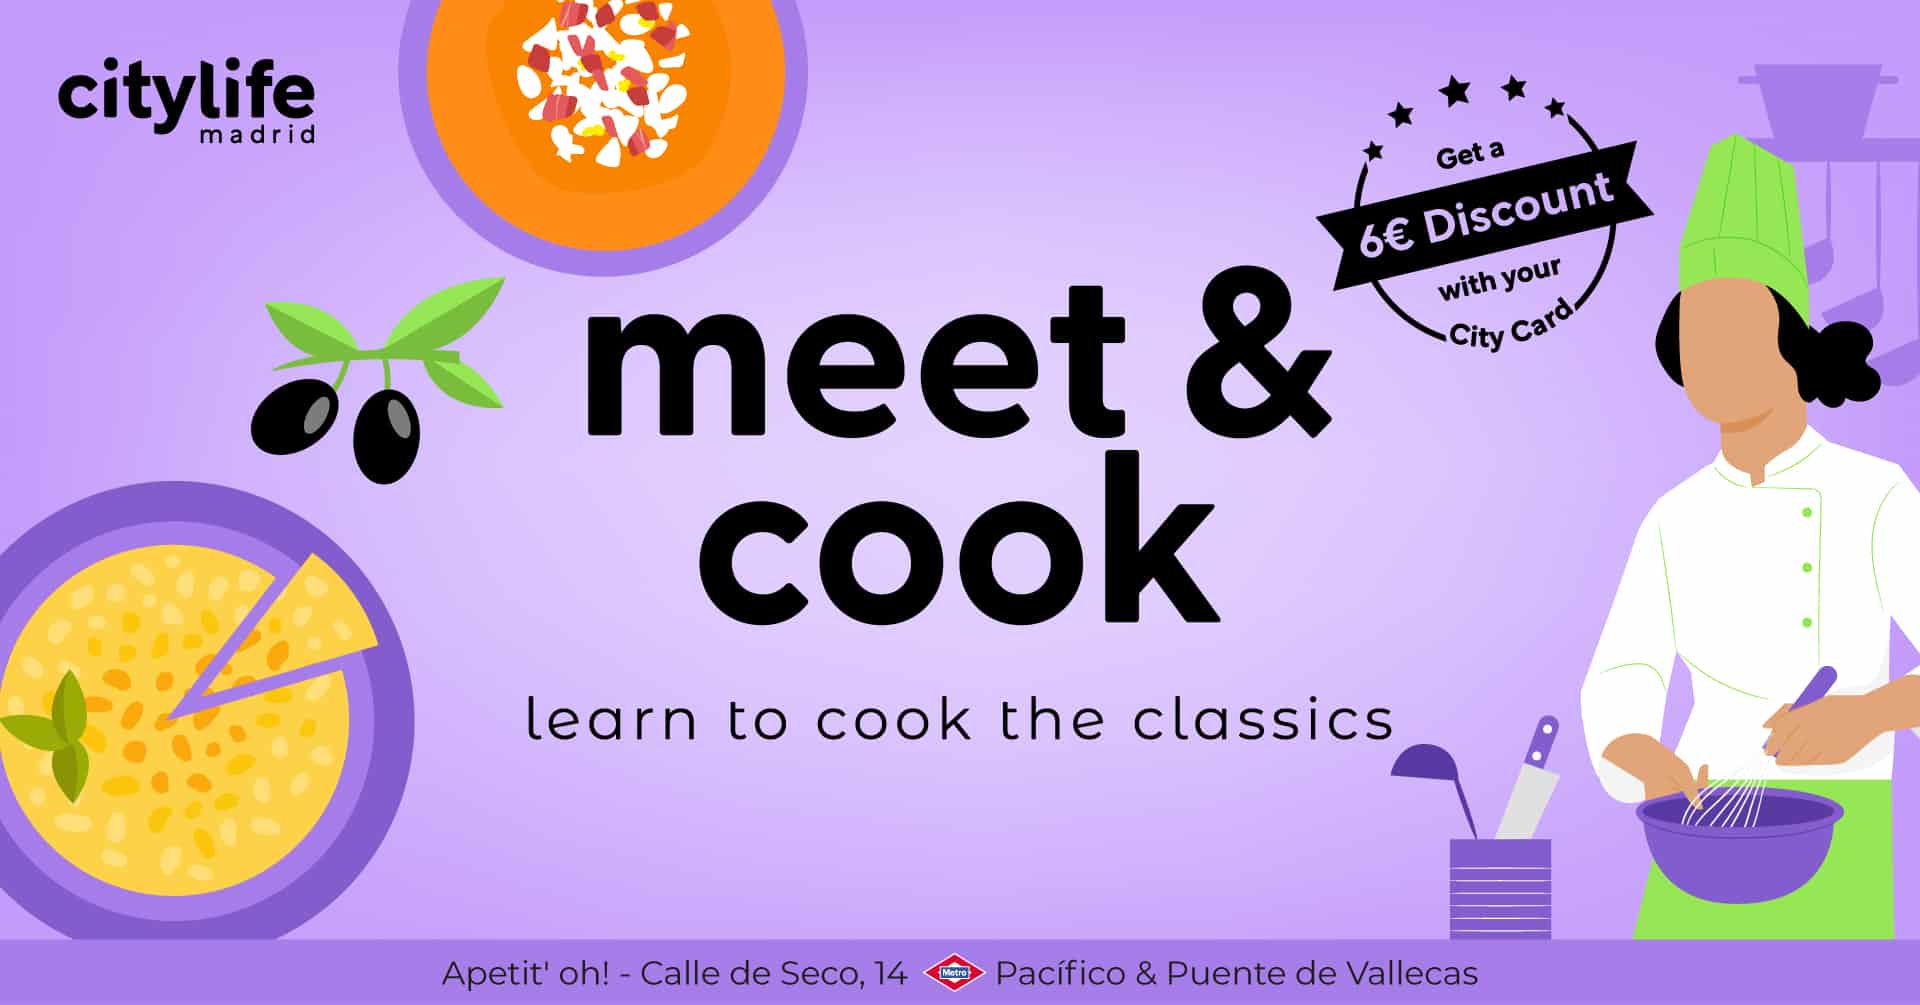 fb-event-meet-and-cook-6e